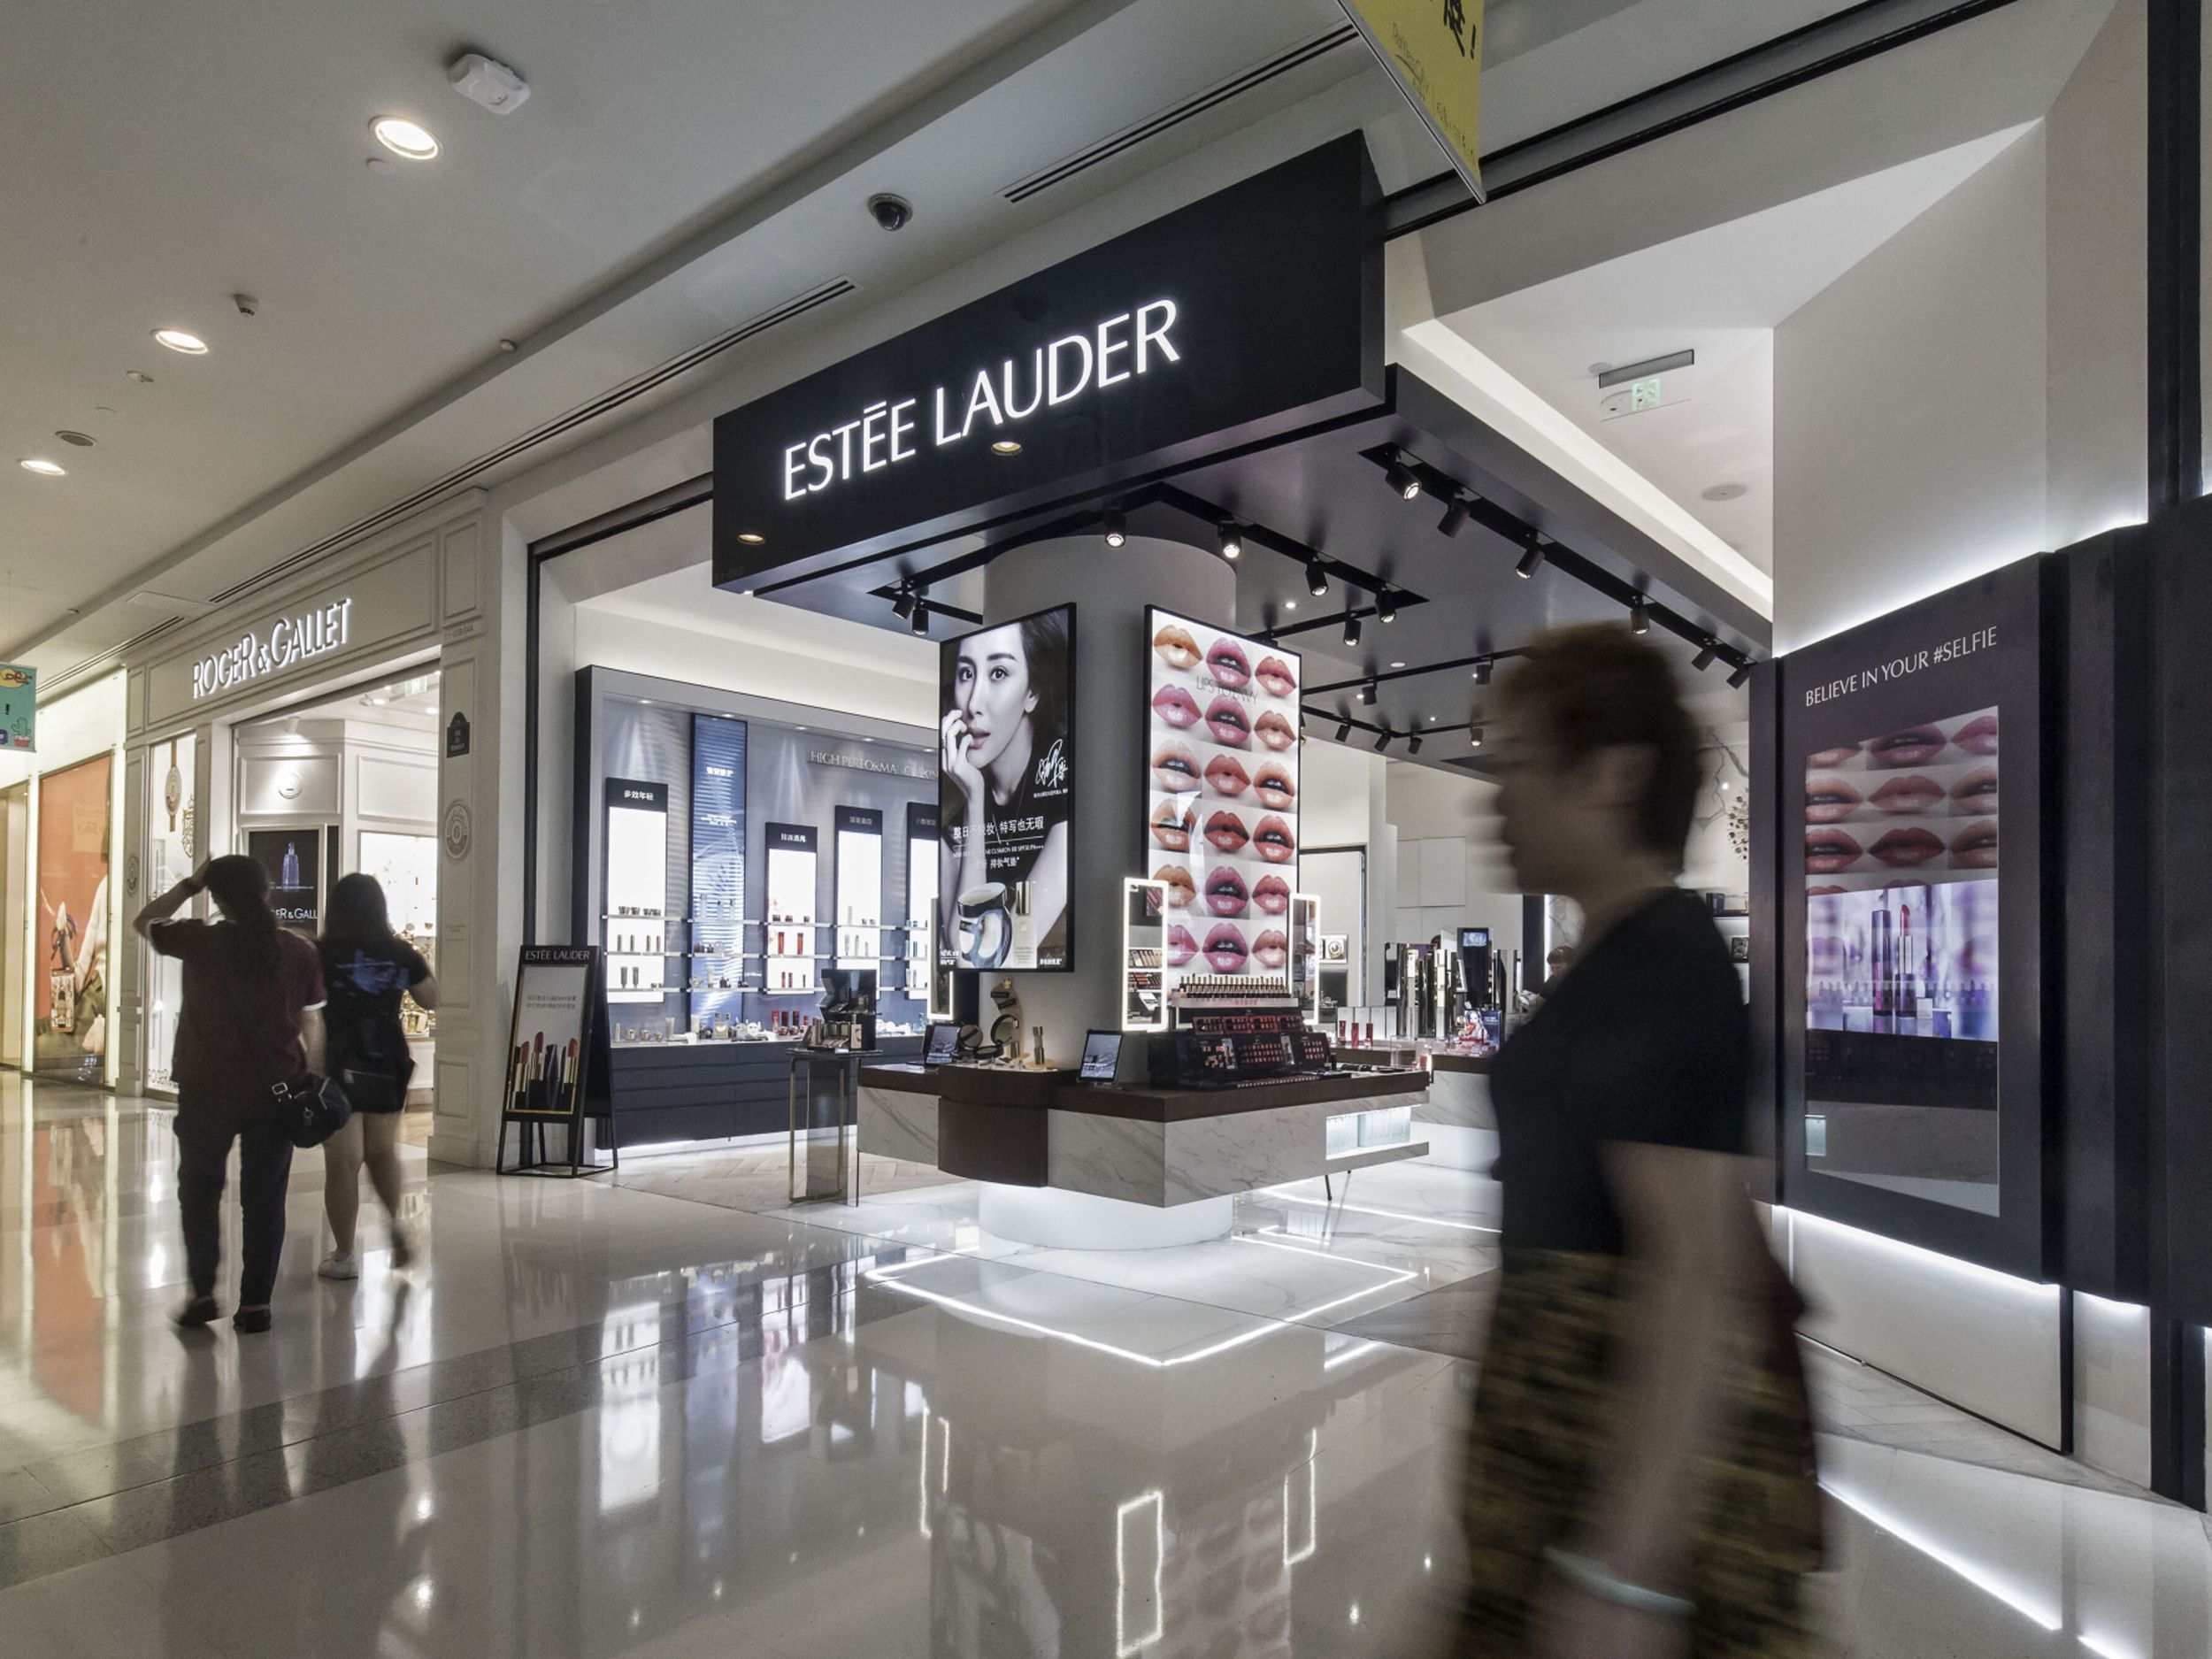 Estée Lauder is falling behind rivals like L'Oréal, even on its home turf